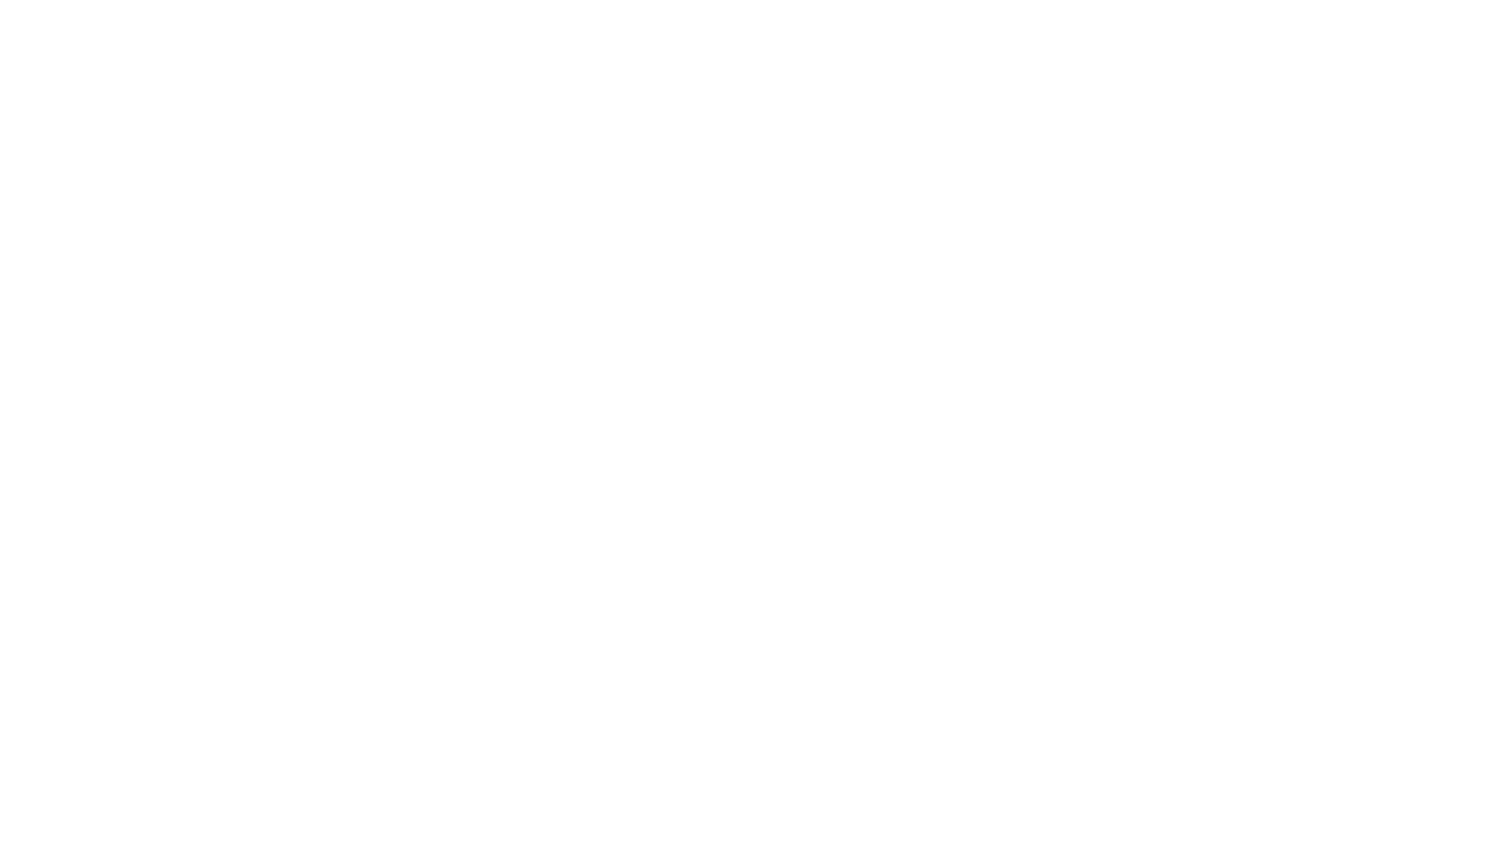 CHURCH OF THE CASCADES